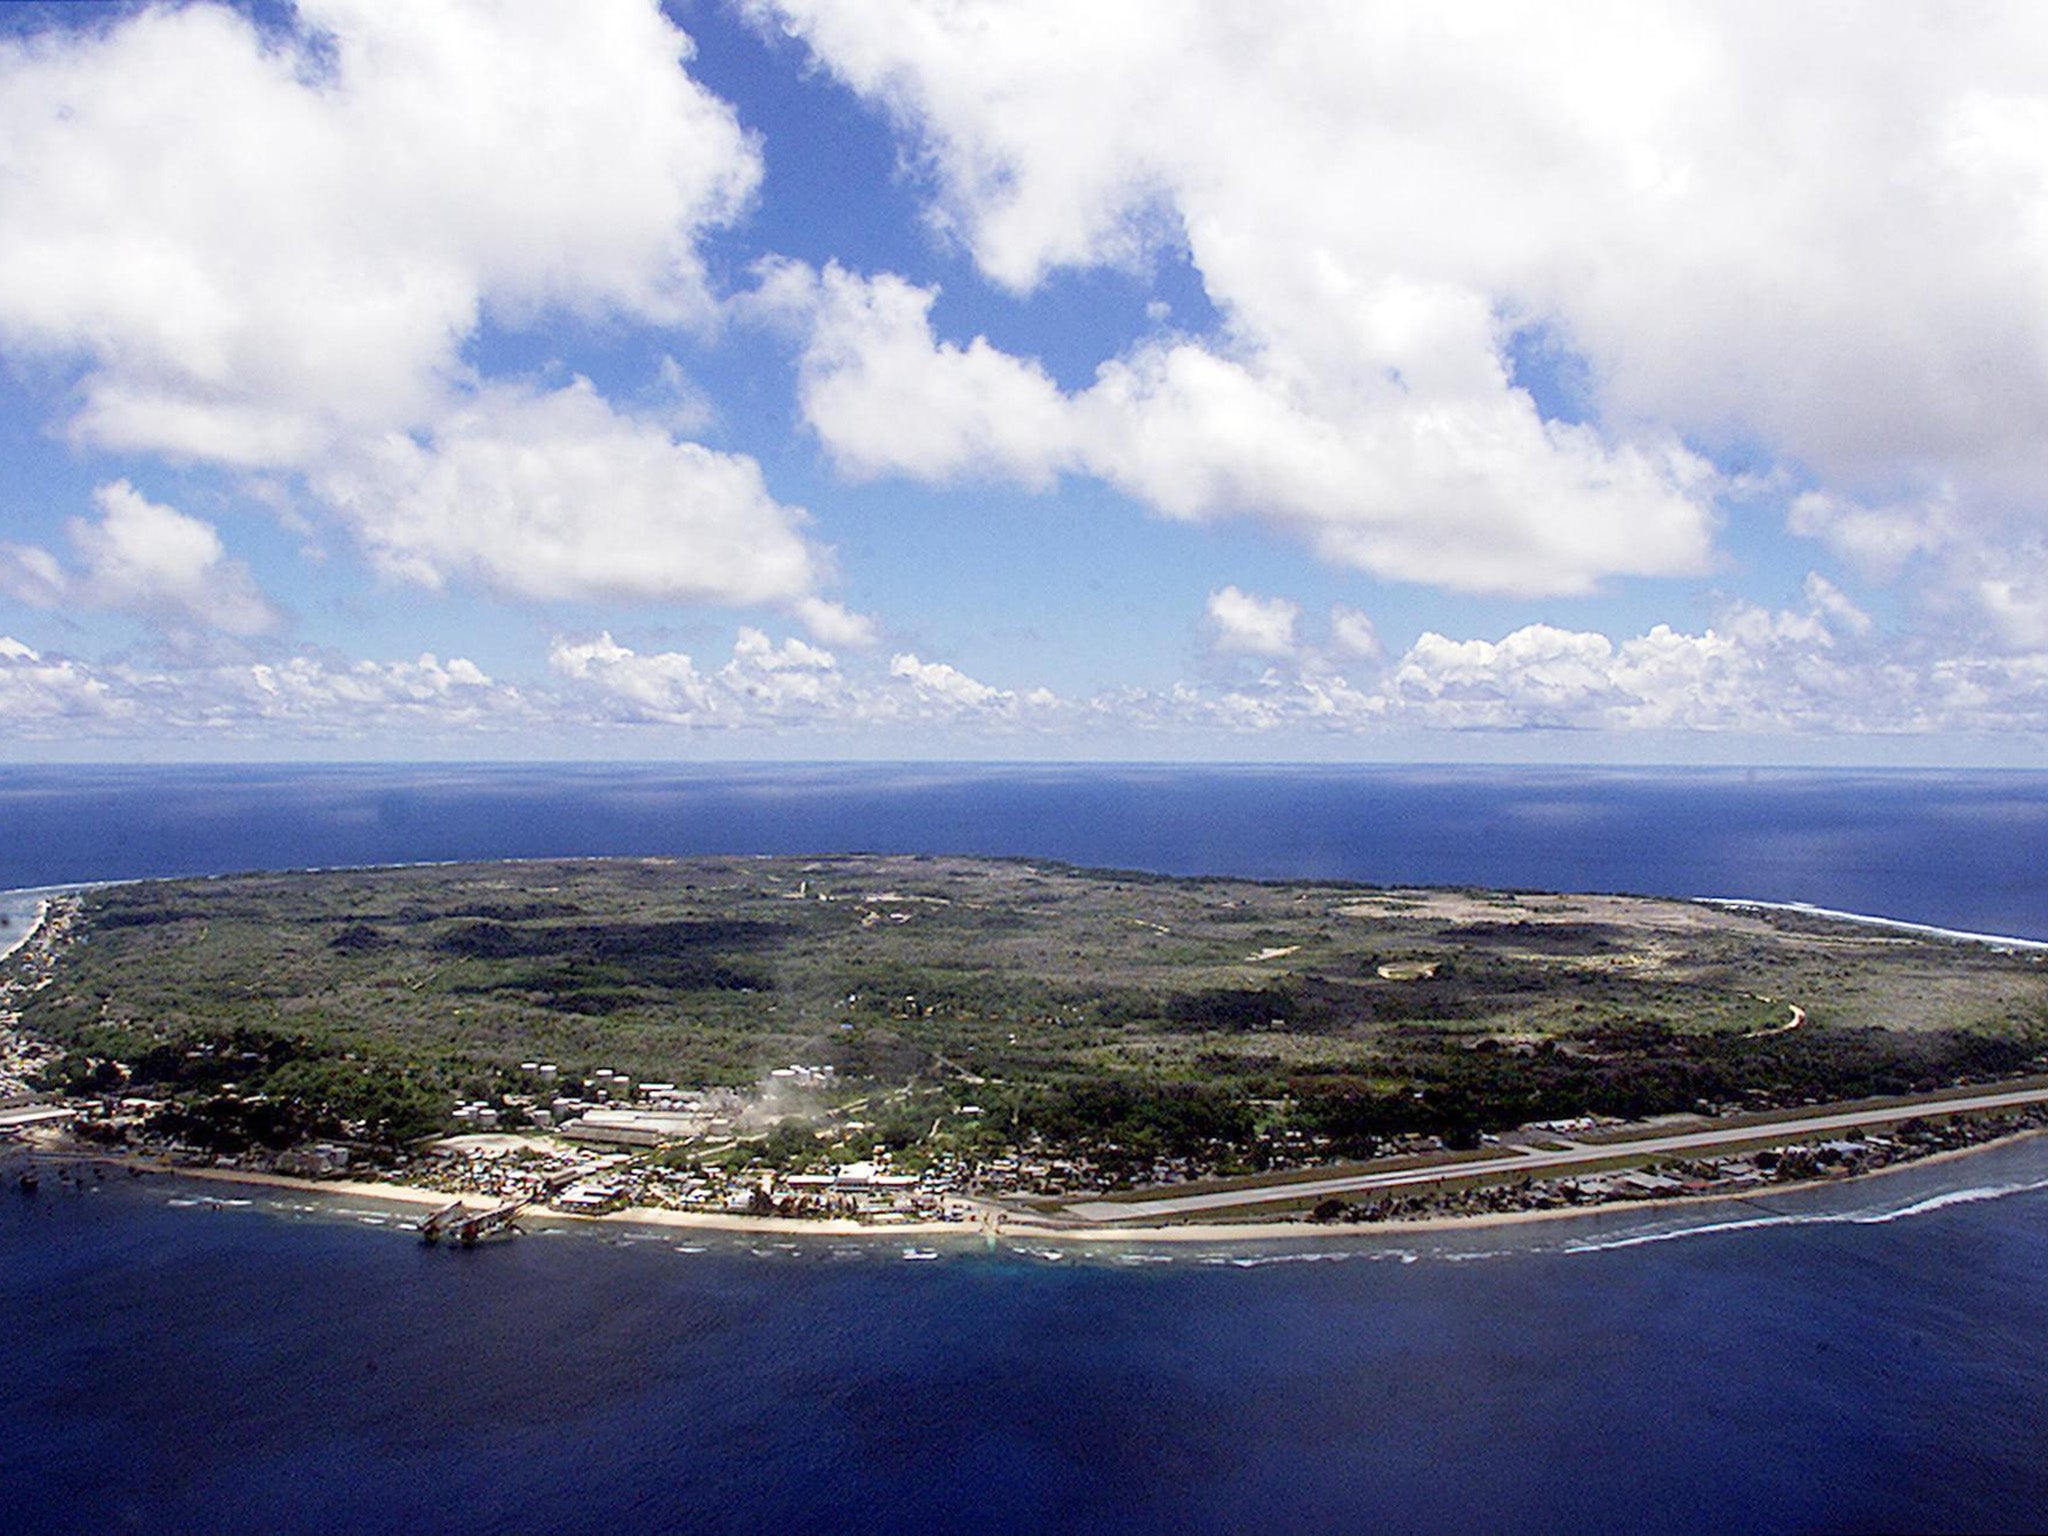 The island of Nauru